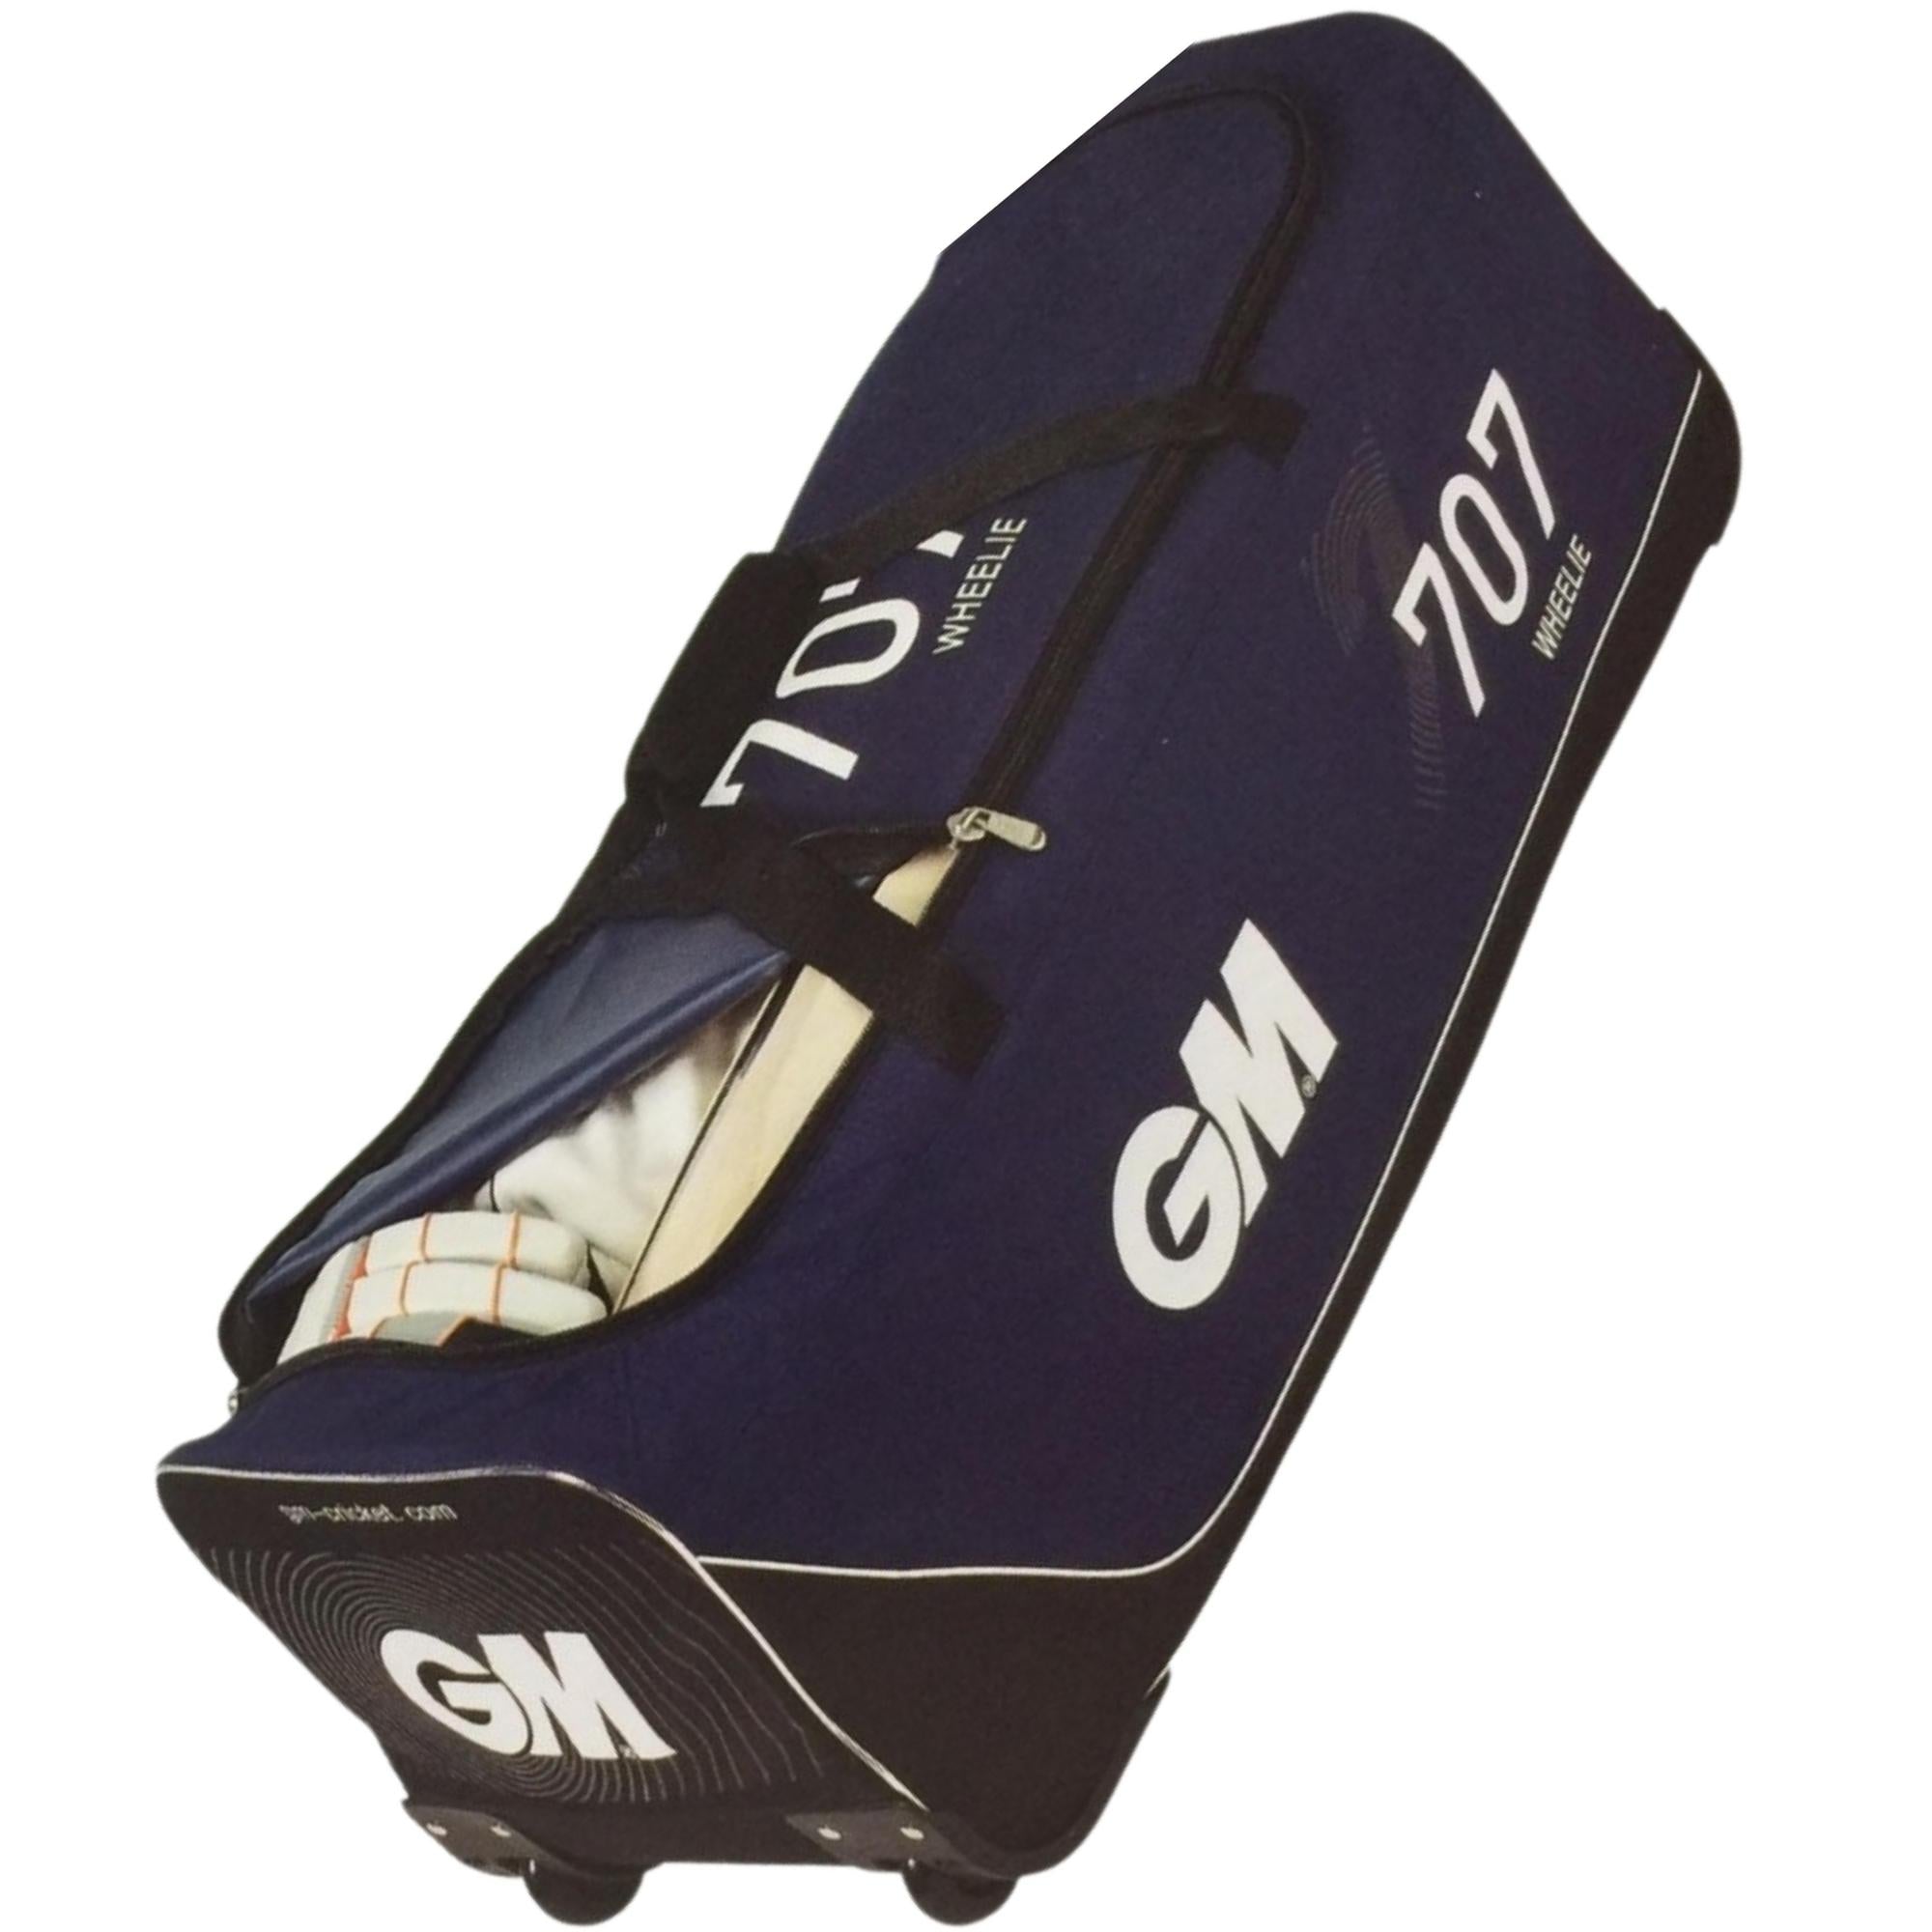 GM Wheel Kit Bag 707 Wheelie